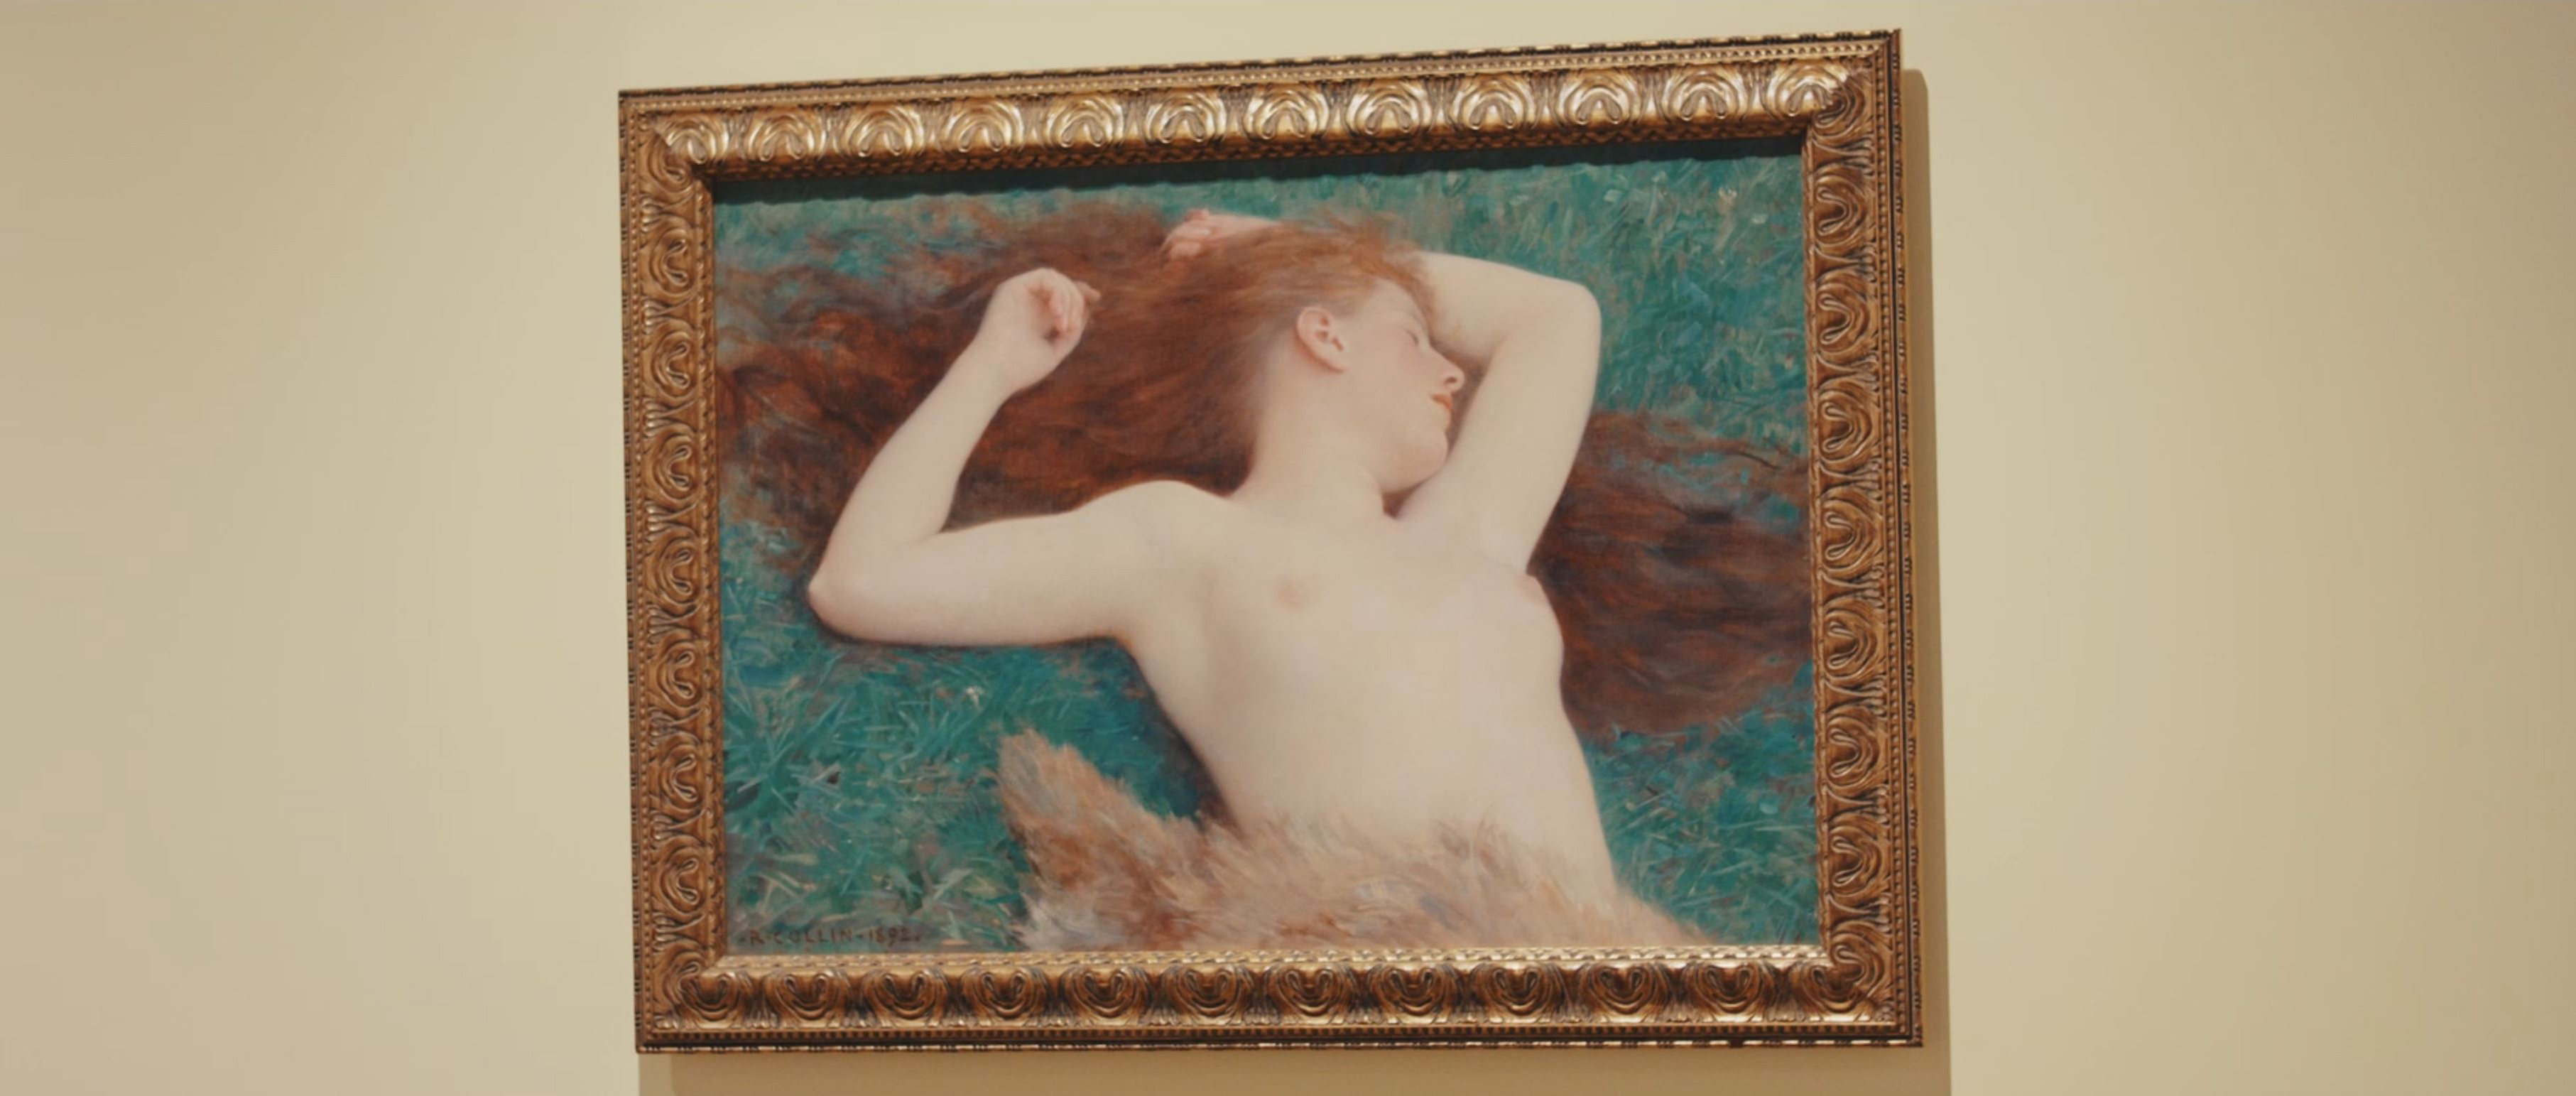 POLA MUSEUM 眠りから覚醒へ −日本の裸婦像を導いたラファエル・コラン《眠り》−